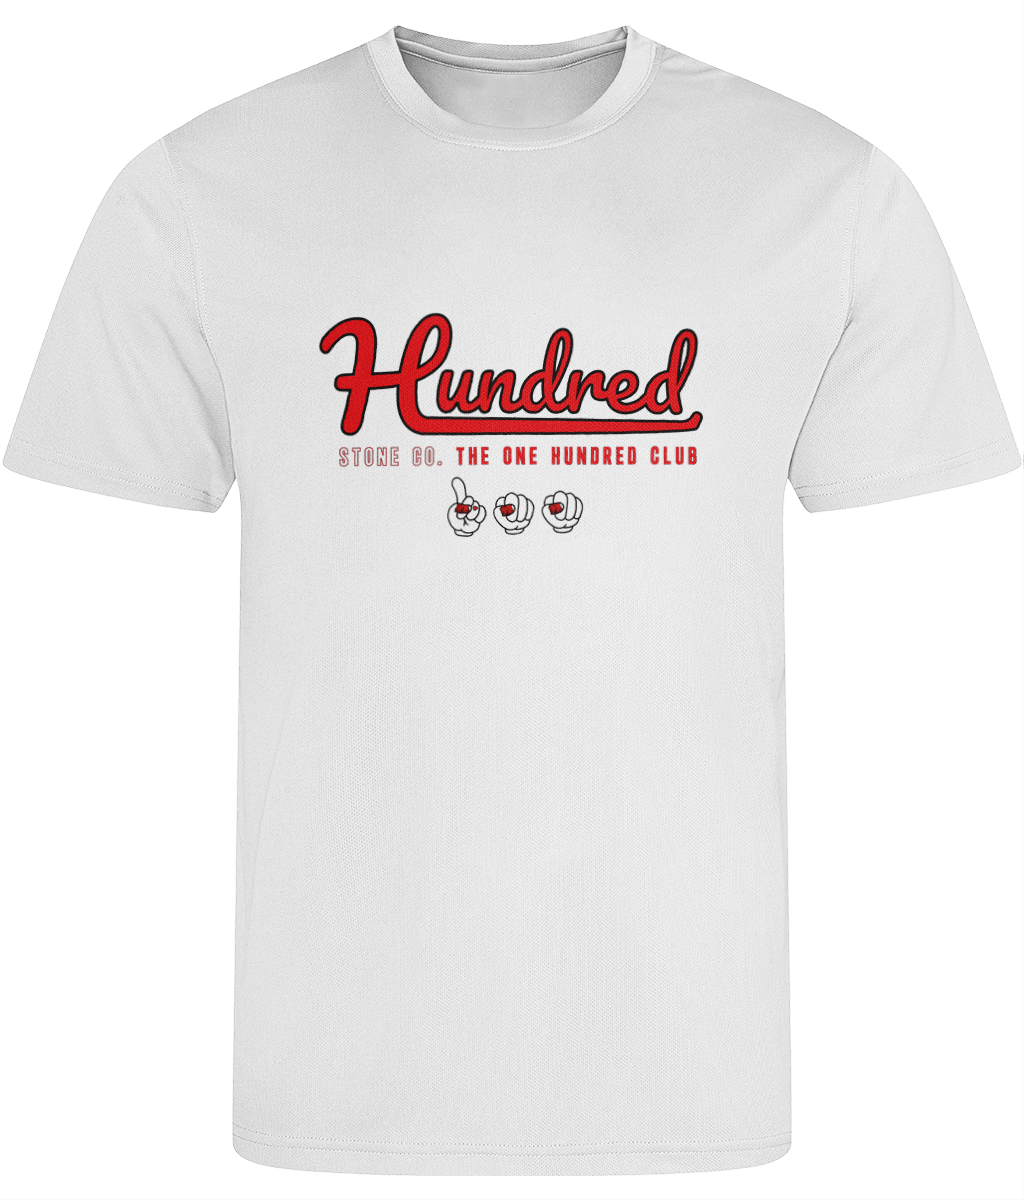 Hundred club active t-shirt